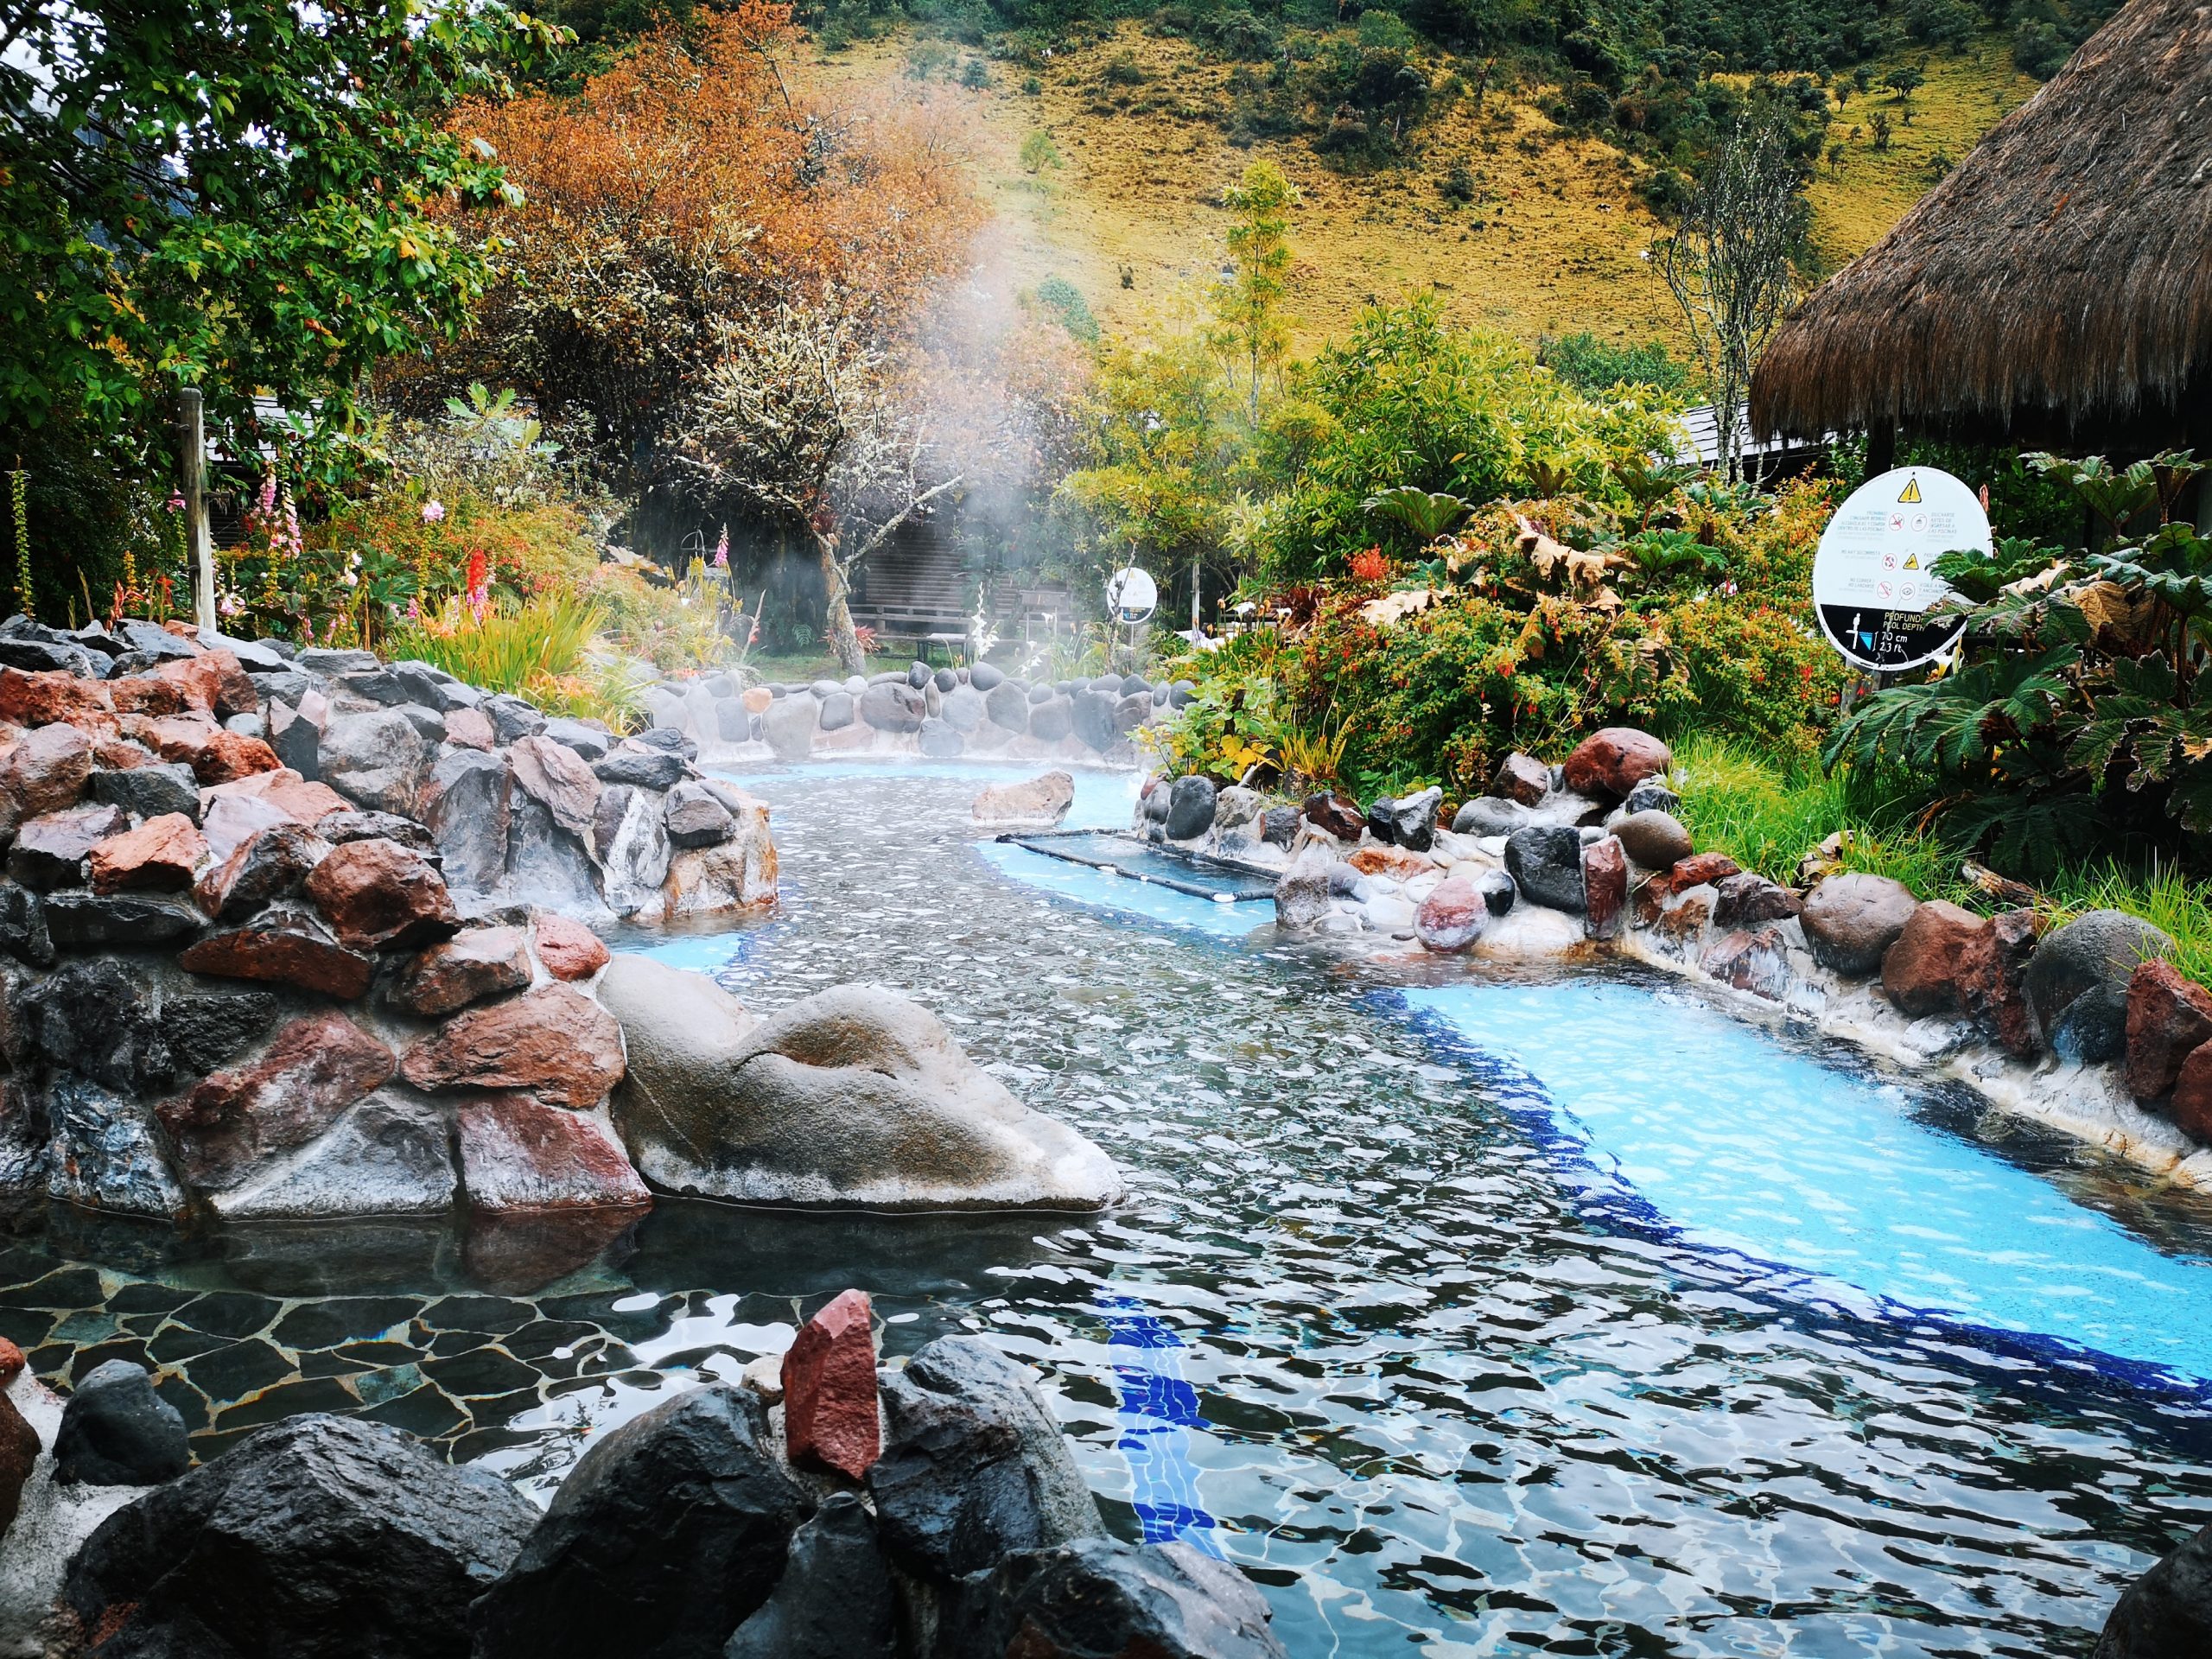 Papallacta hot springs